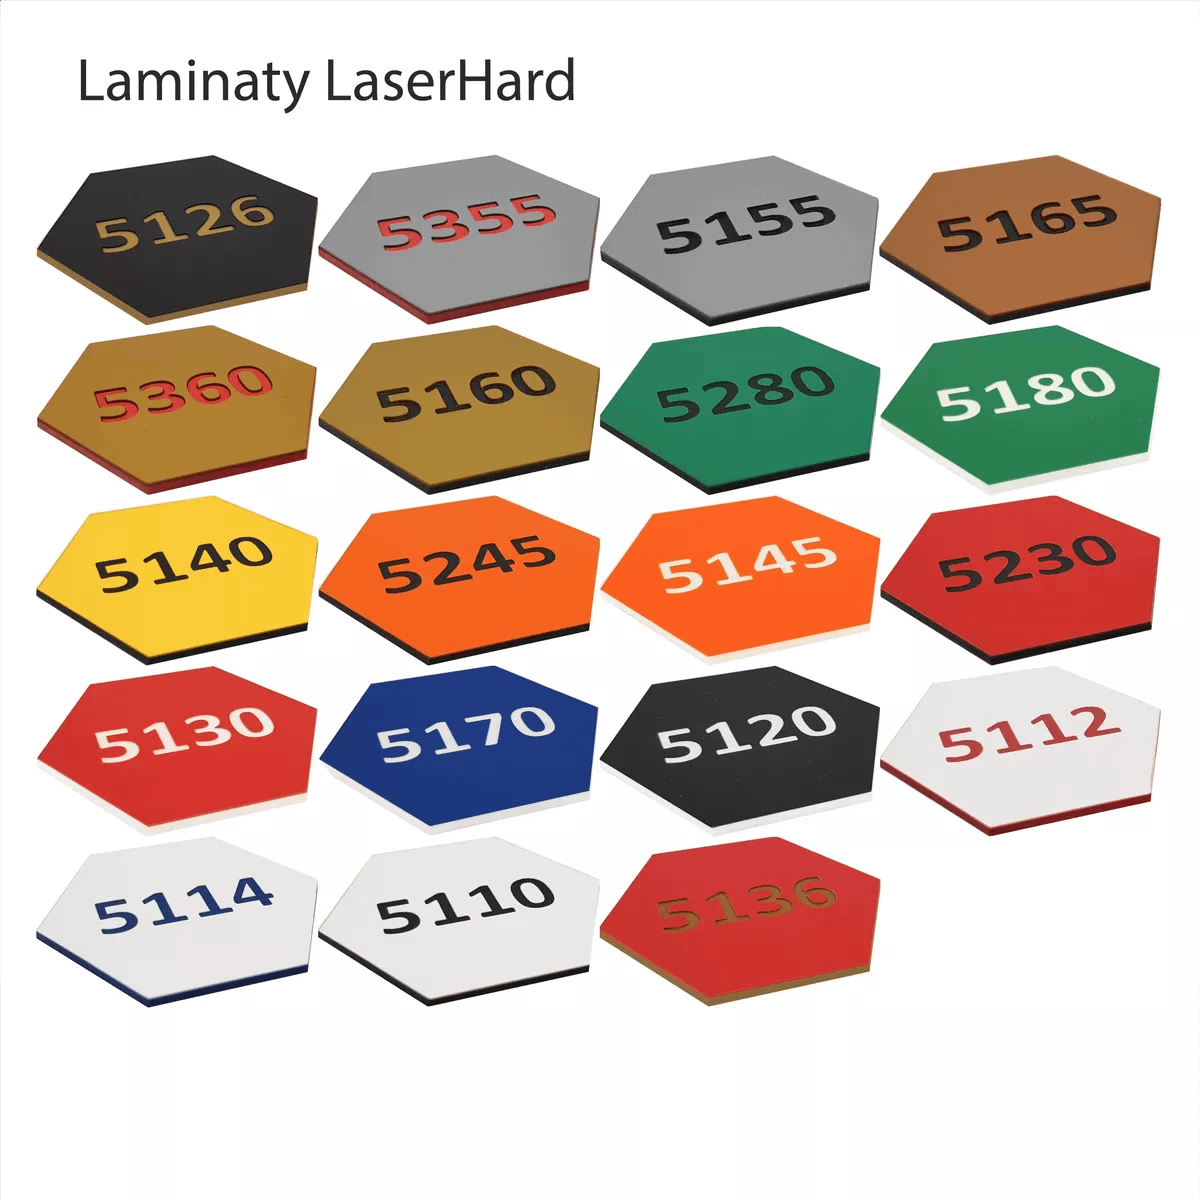 Laminaty LaserHard_webp